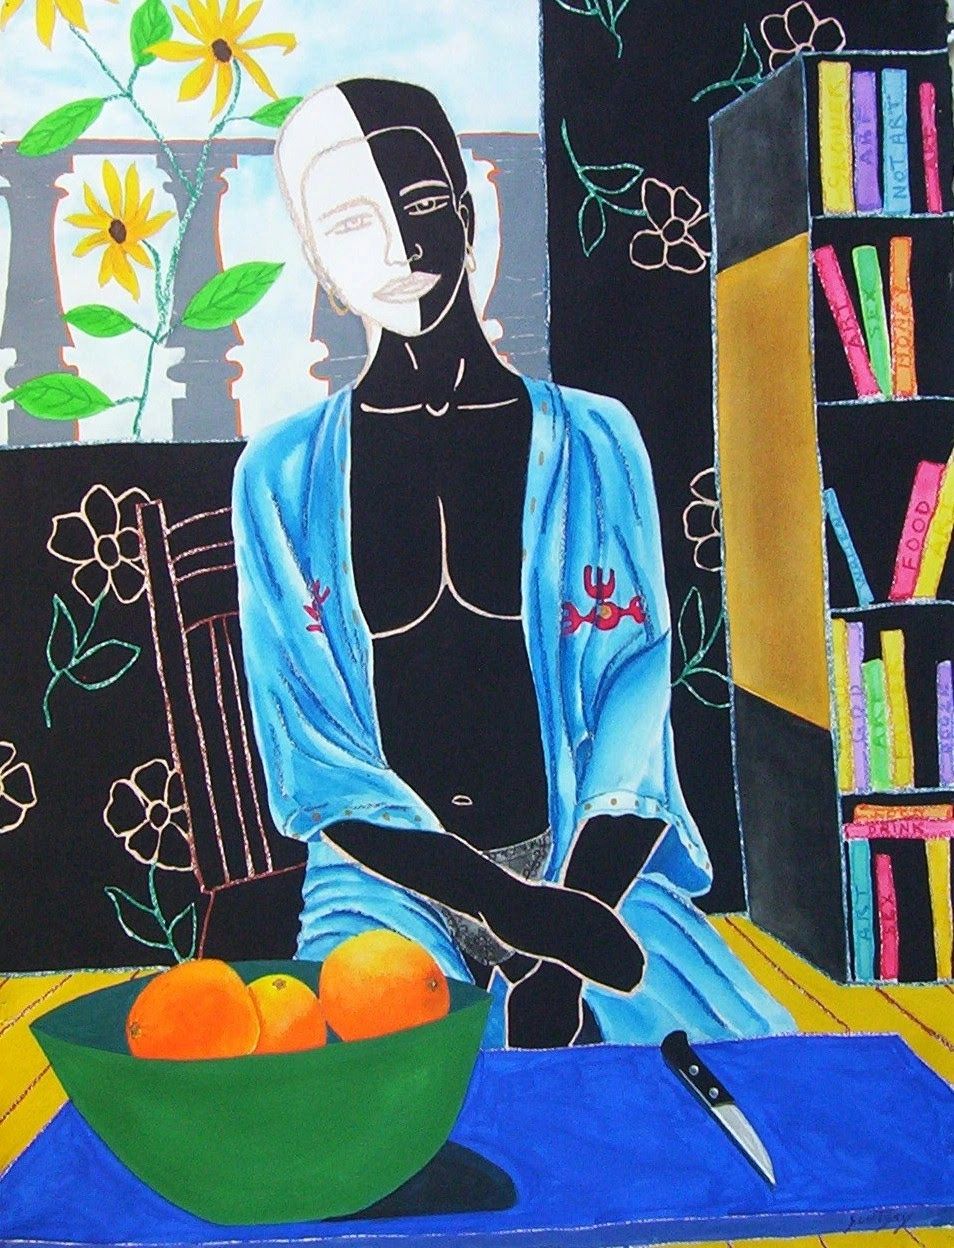 Woman in aquamarine robe. Bowl of oranges. Knife, bookshelf, books. Open window, balcony, flowers 